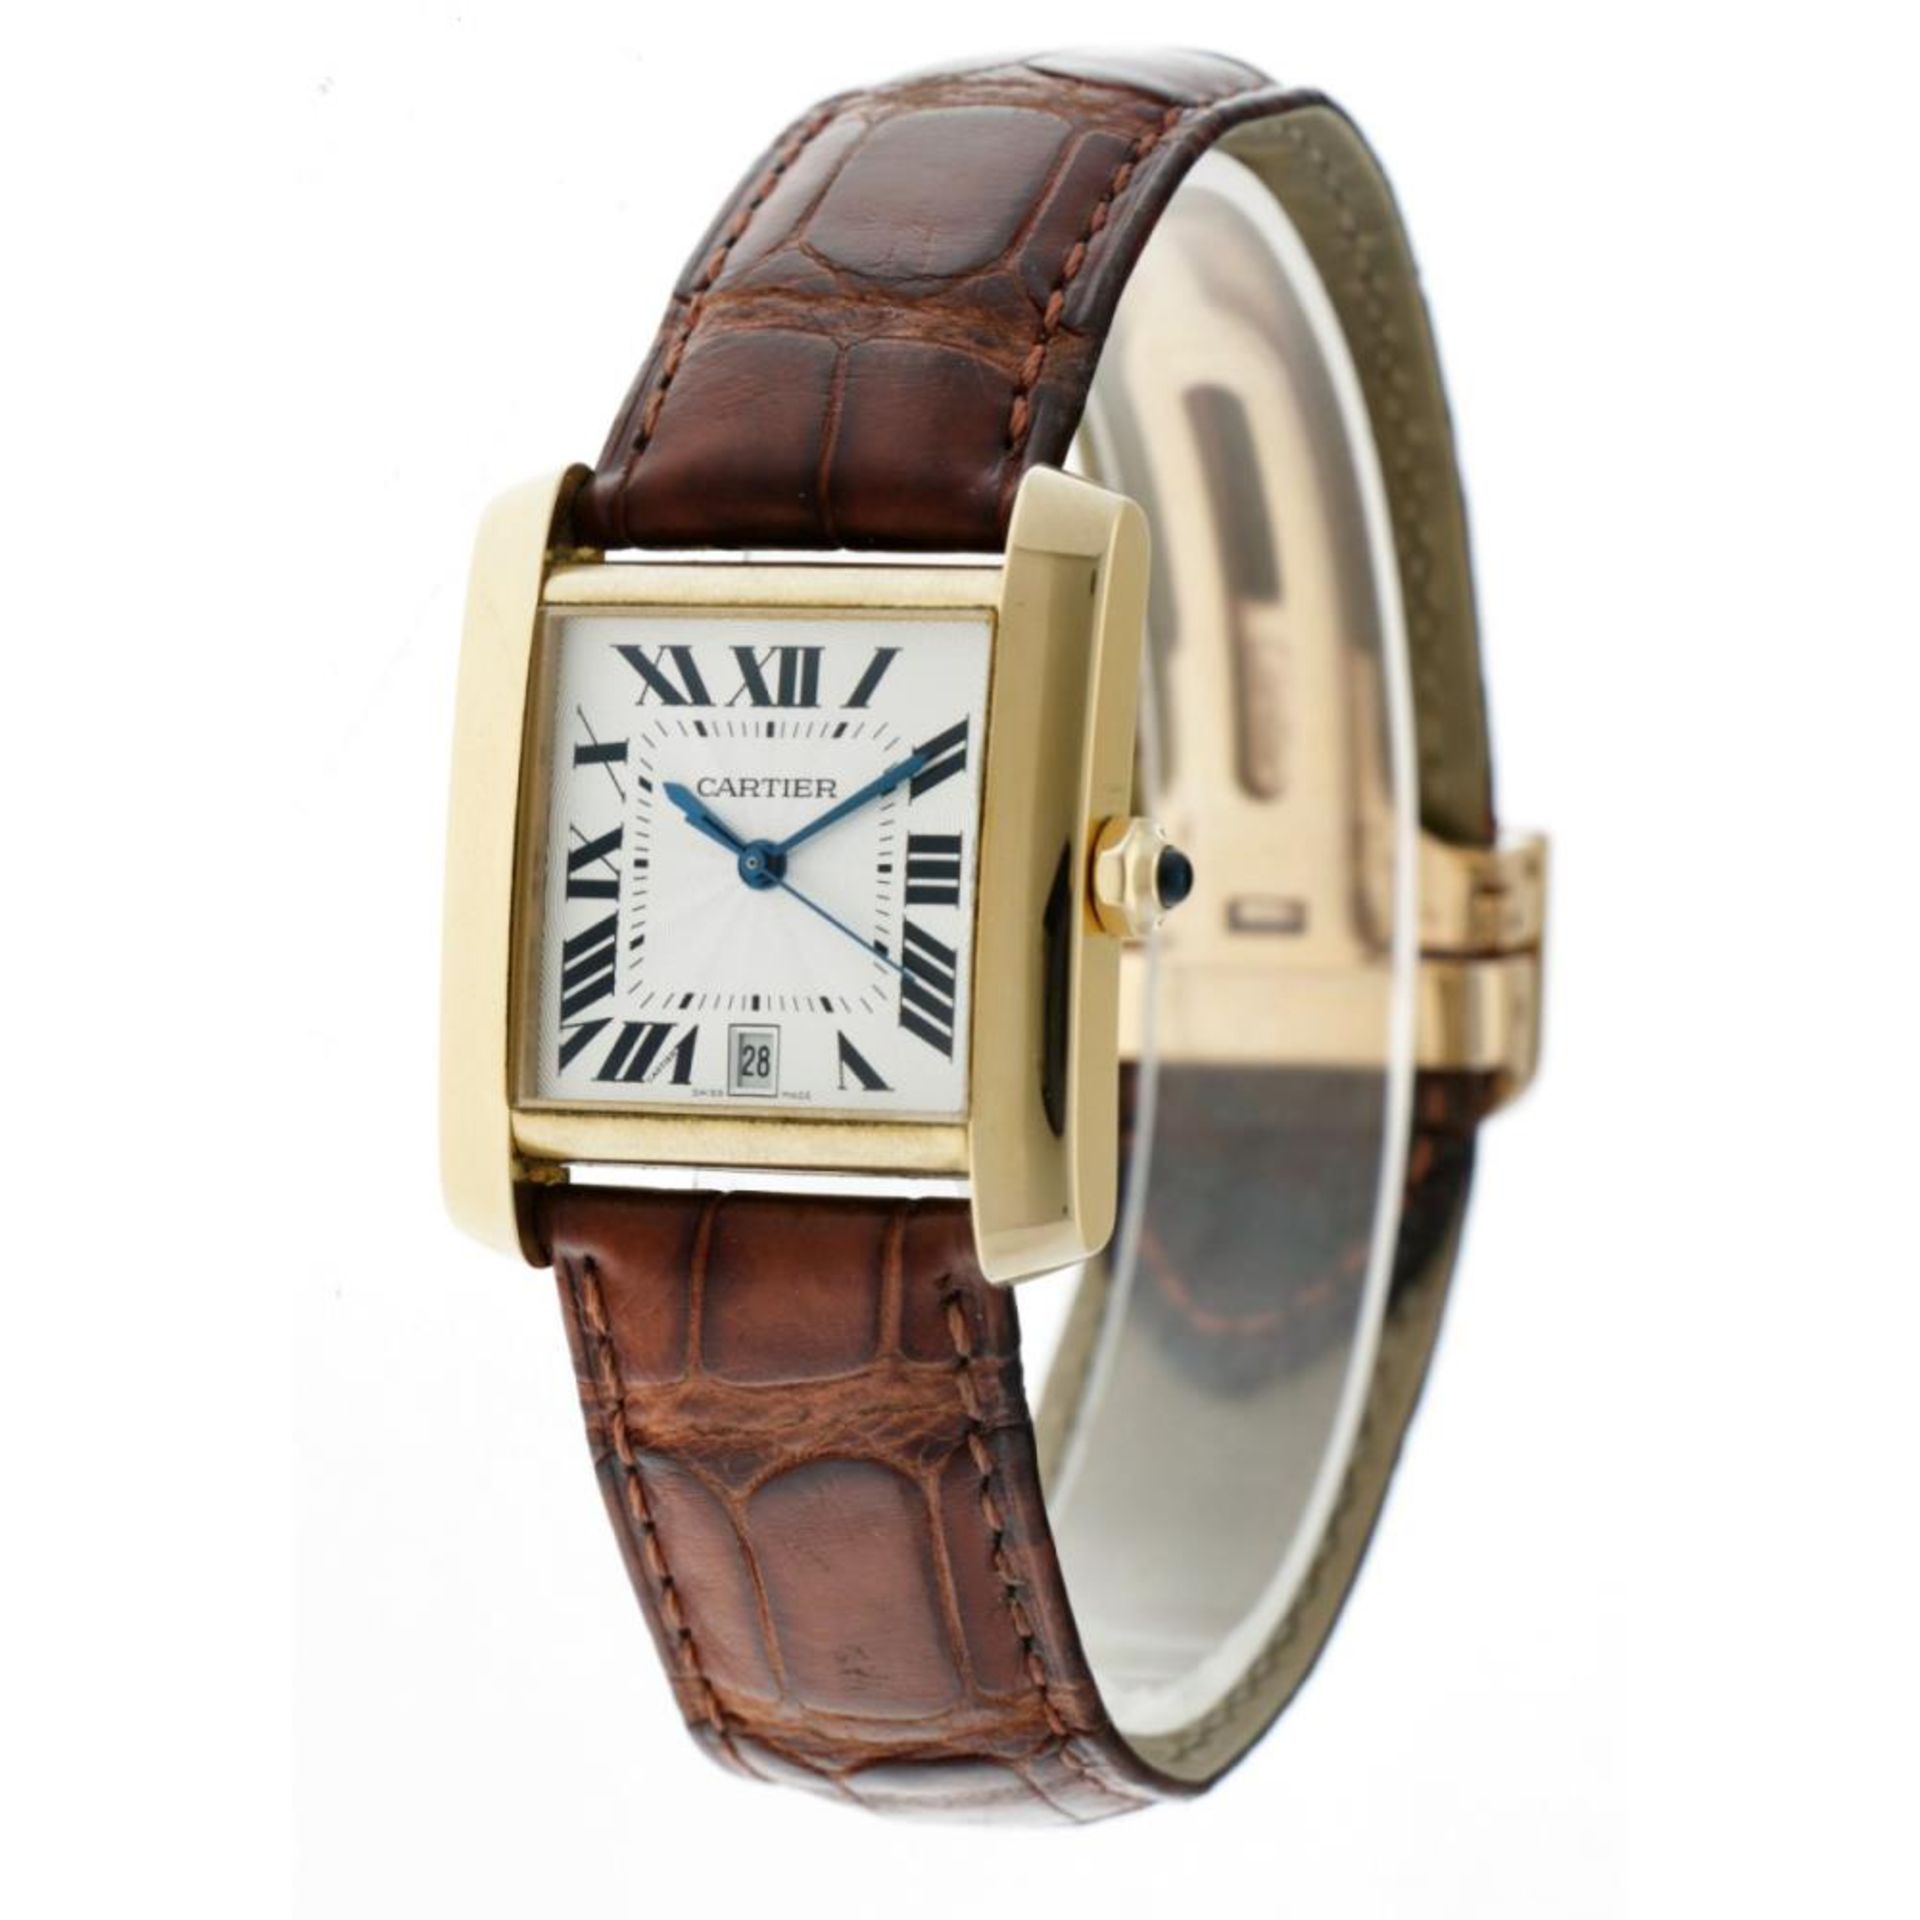 Cartier Tank Française 1840 - Men's watch - approx. 2000. - Image 4 of 12